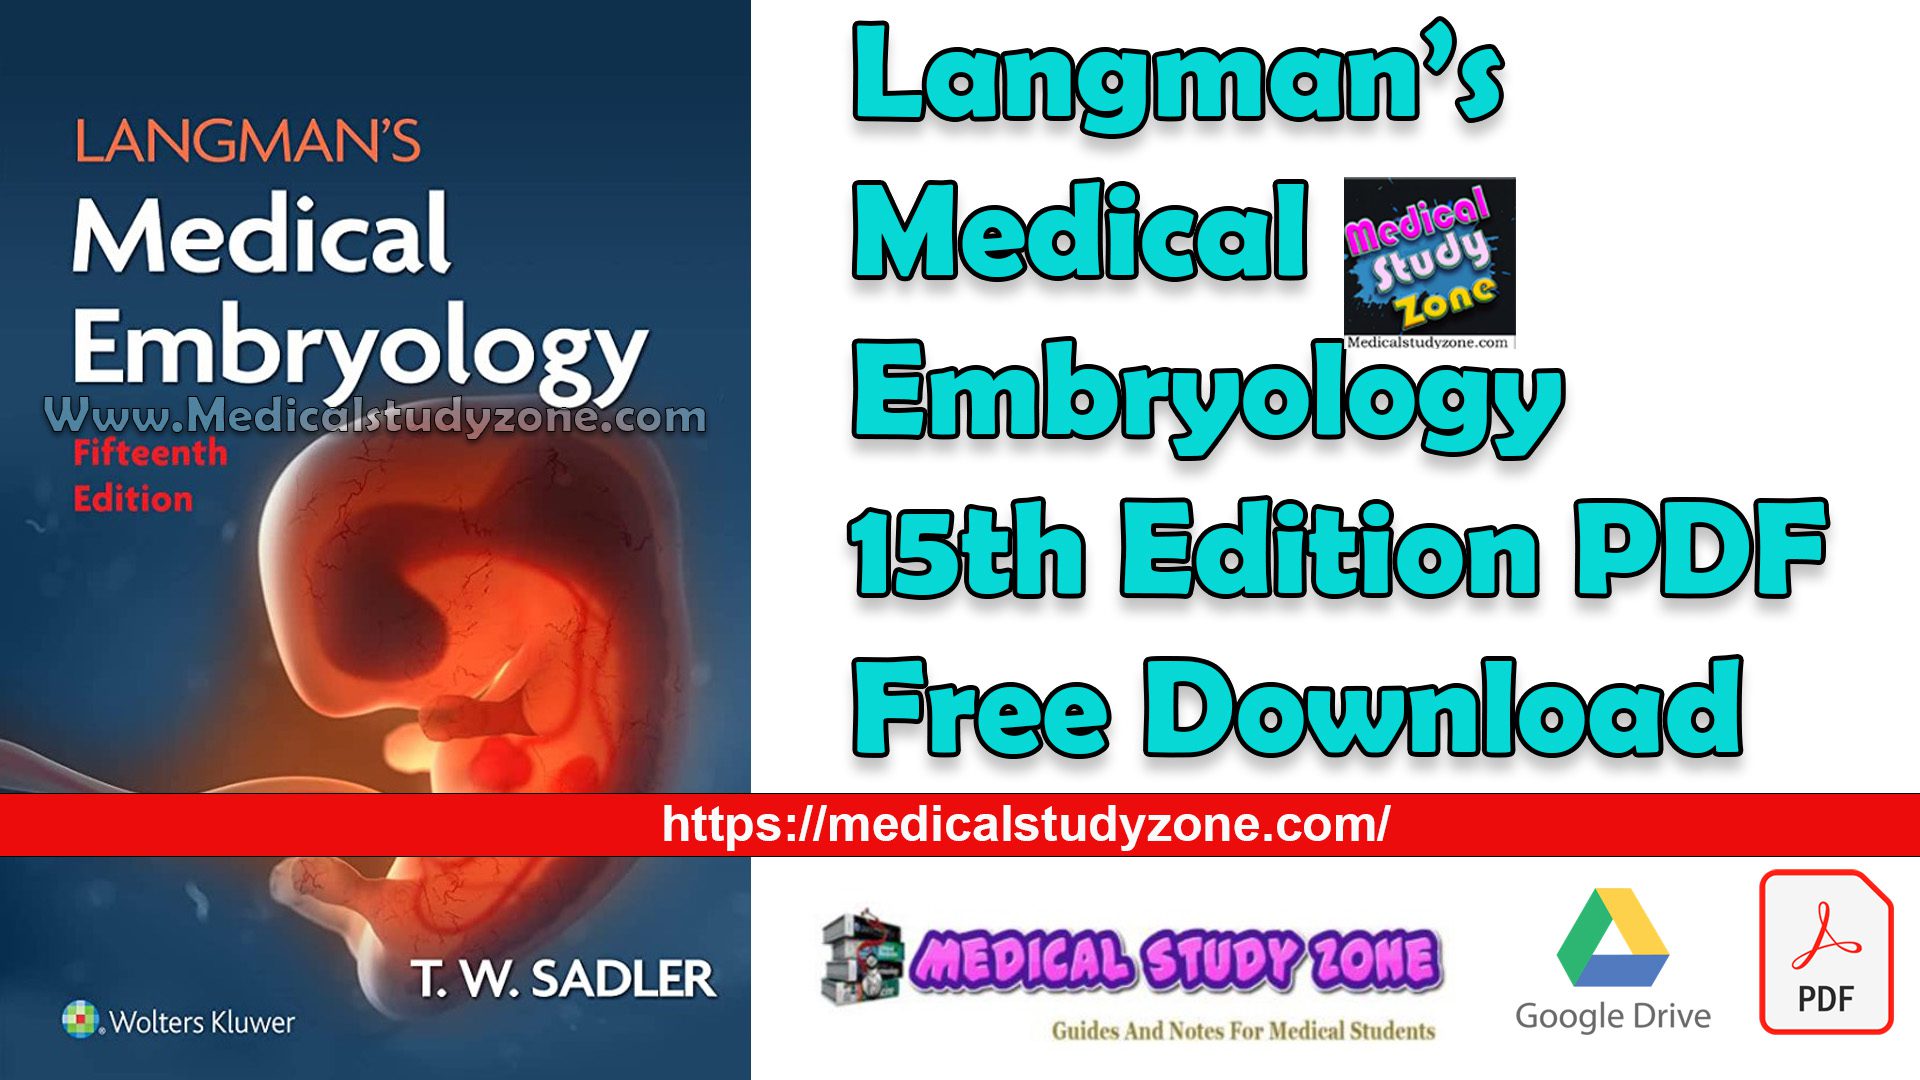 Langman’s Medical Embryology 15th Edition PDF Free Download